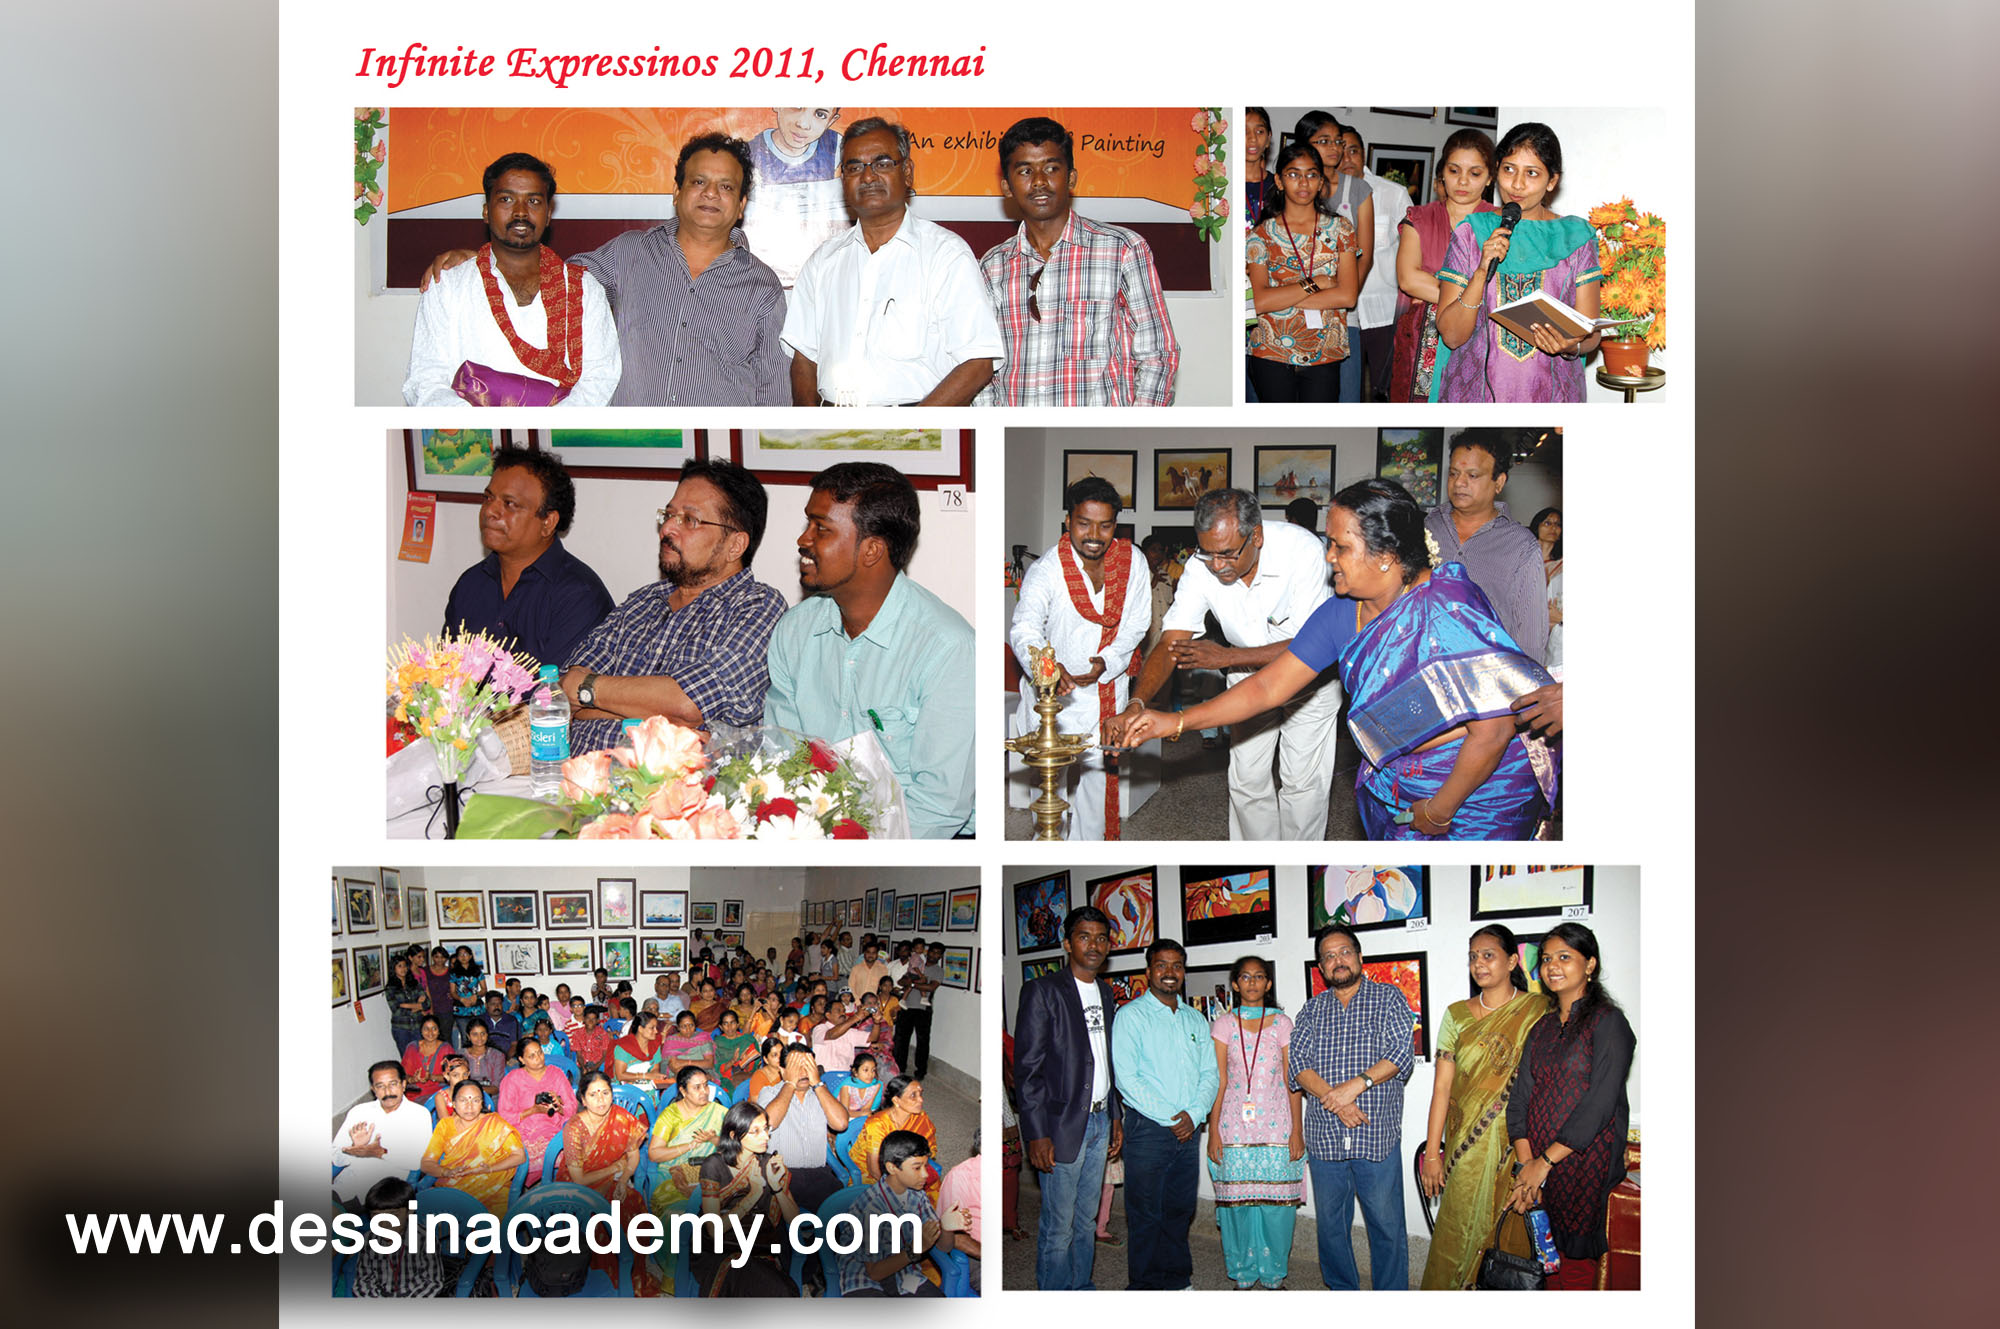 Dessin School of arts Event Gallery 5, Painting classes in AmbatturSai Academy